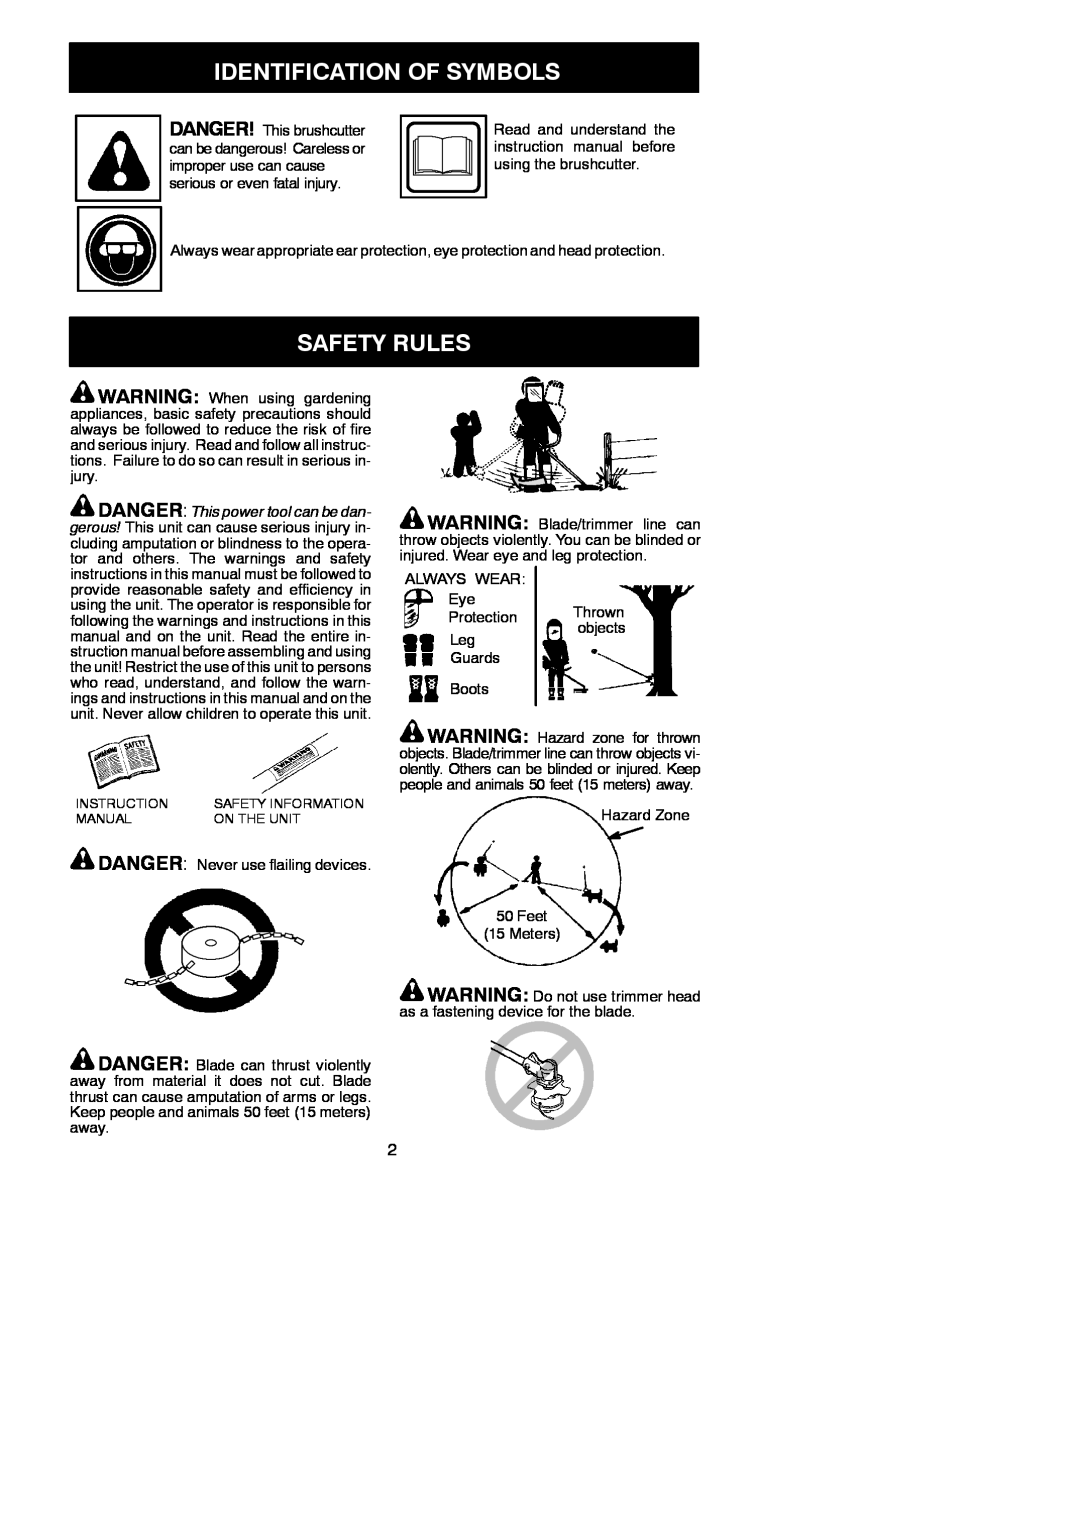 Poulan 530164264 instruction manual Identification Of Symbols, Safety Rules 